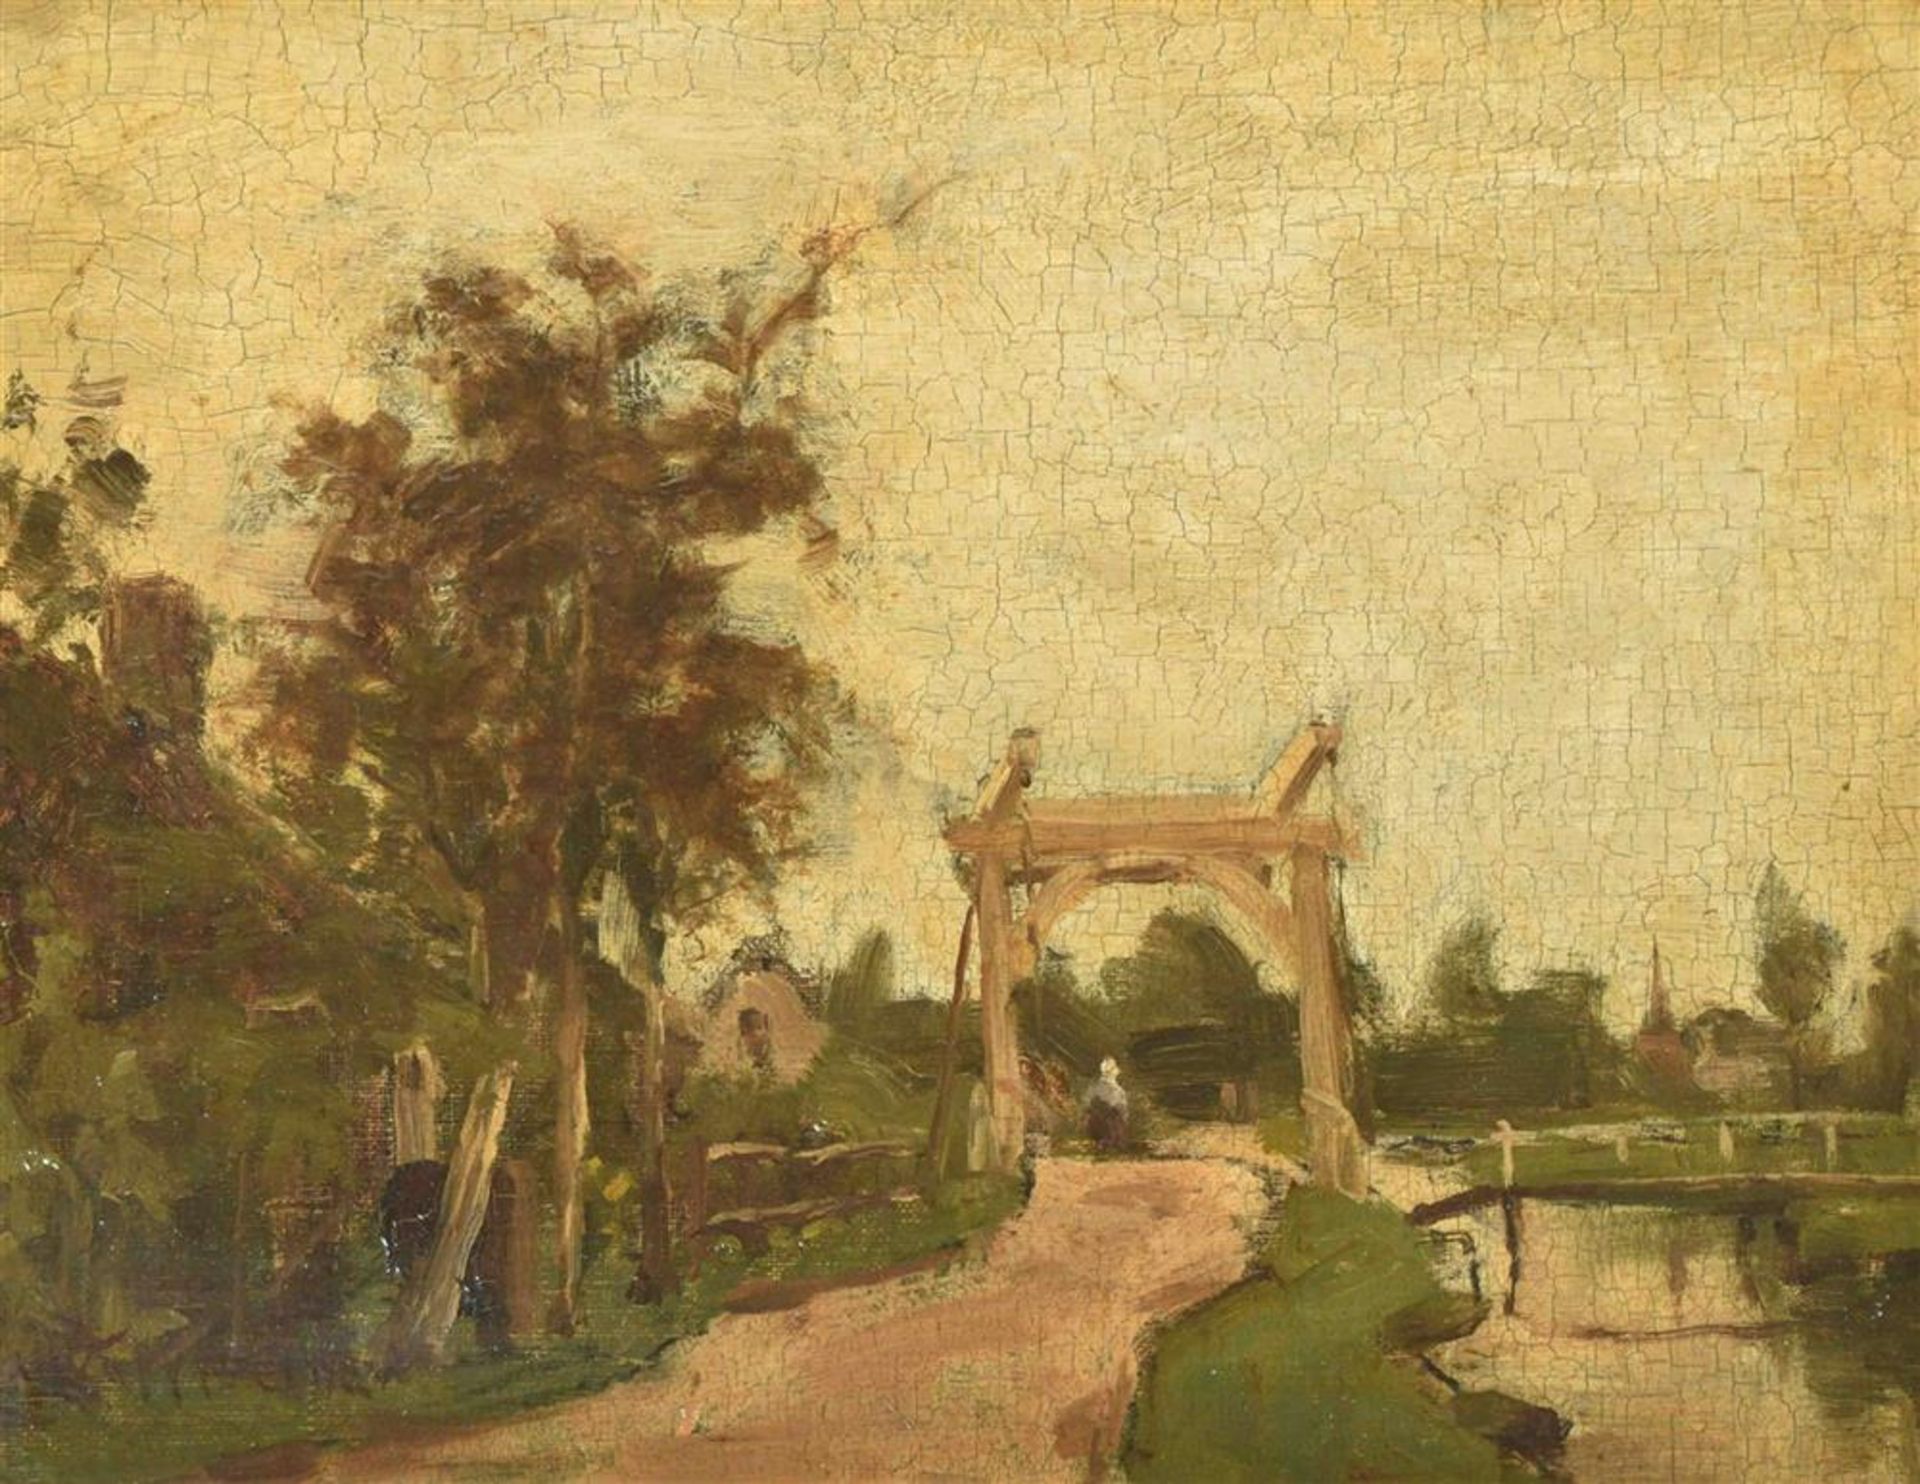 Wall Perné, J. van de (1877-1941). View of a village with bridge - Image 2 of 3